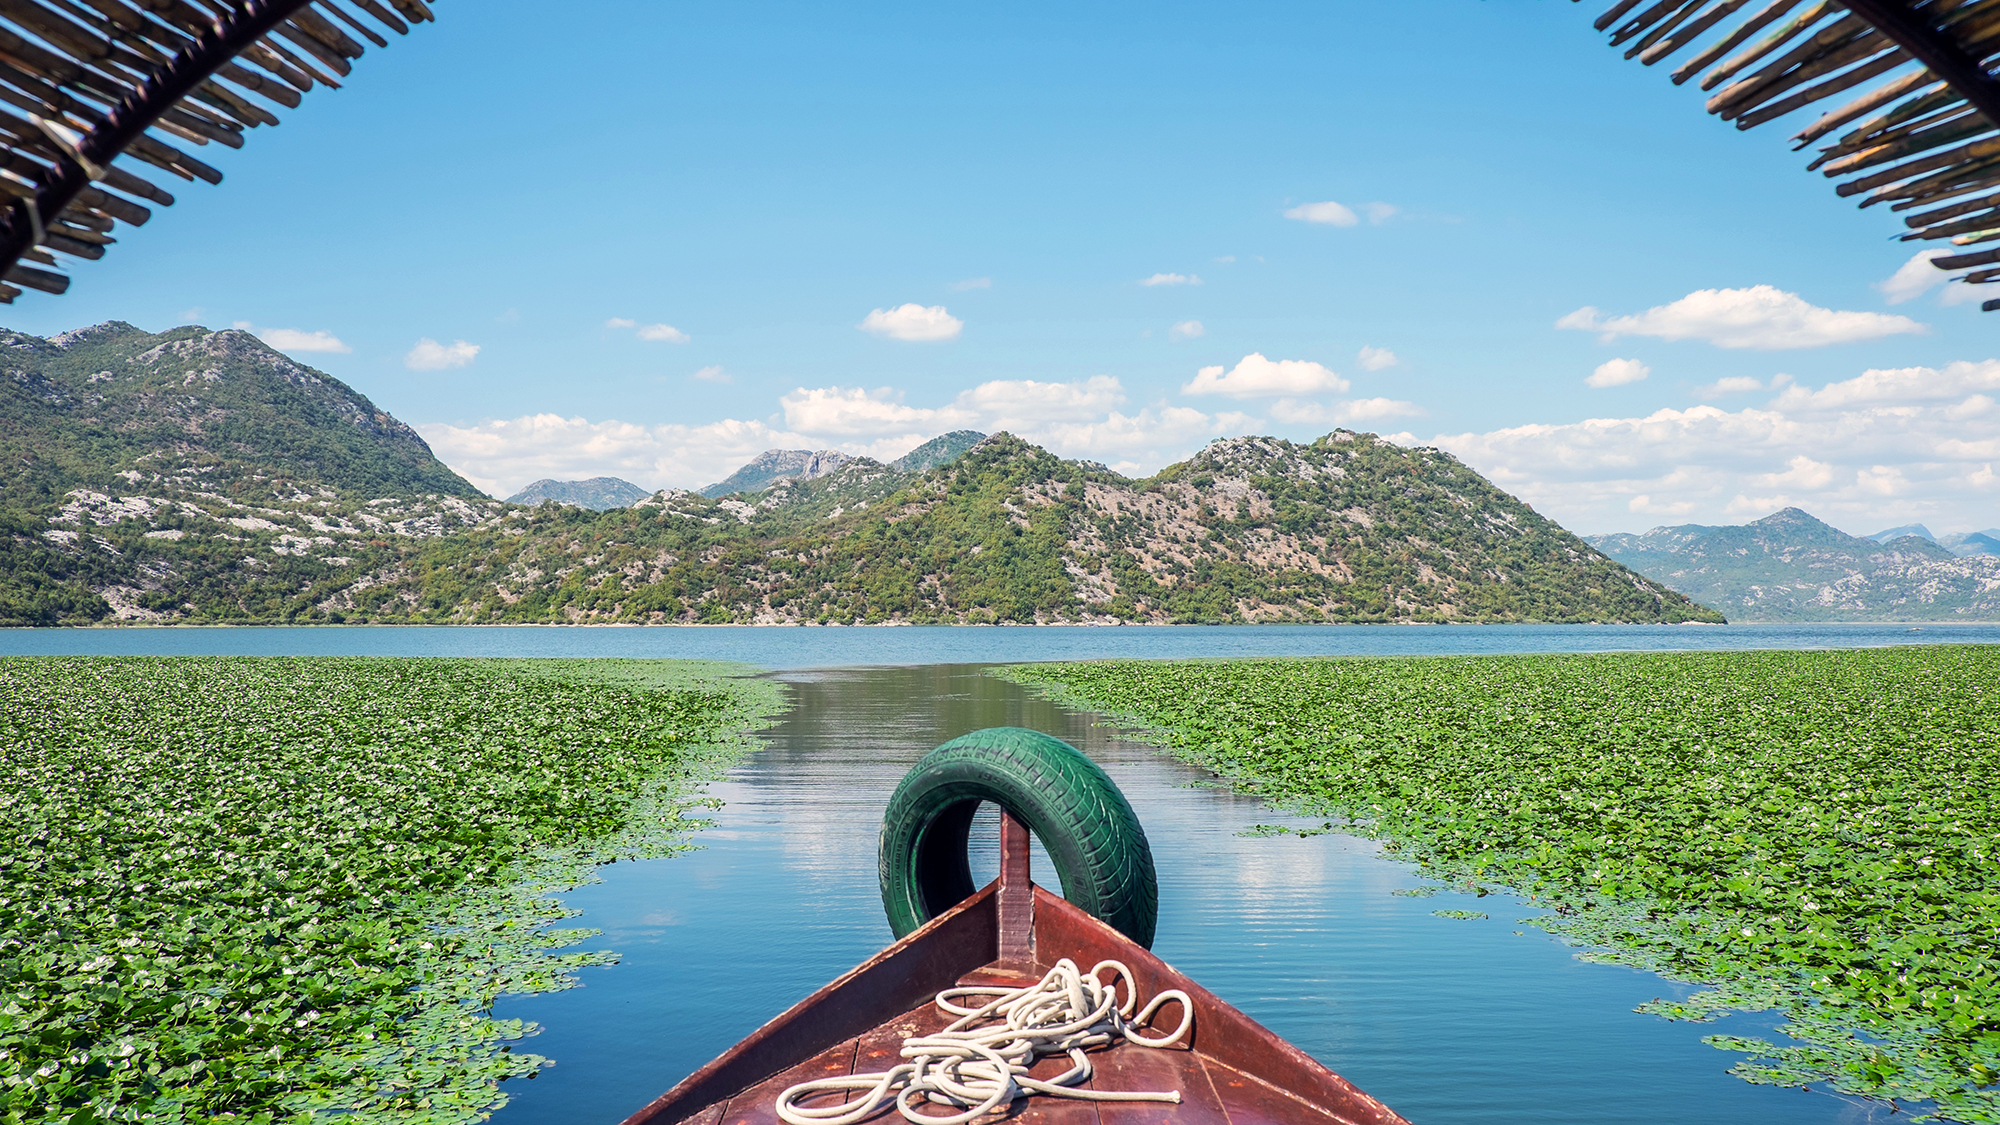 Boating on the beautiful lake. Lake Skadar National Park, Montenegro.